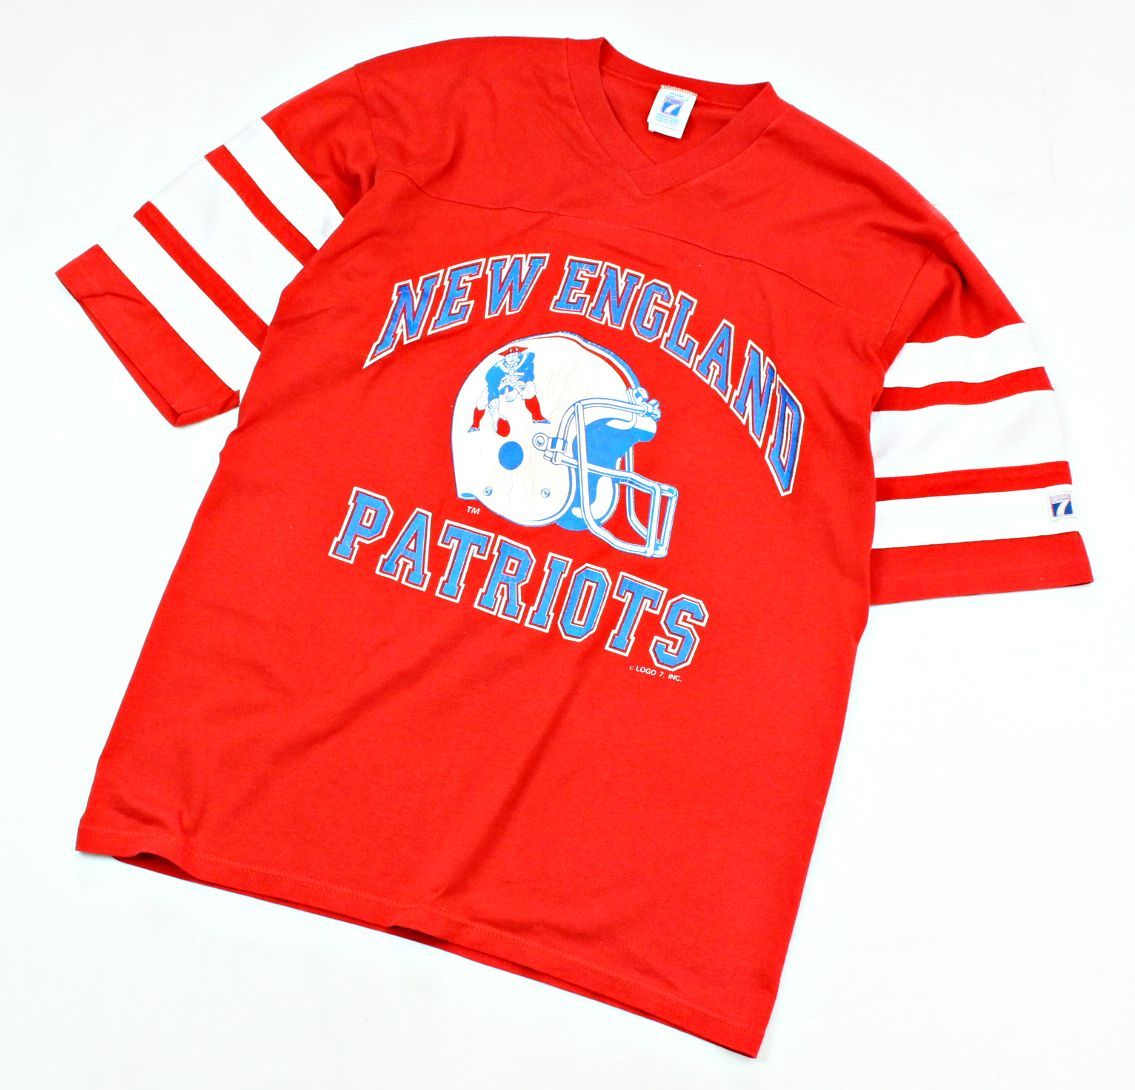 vintage New England カットオフ フットボールシャツ 白 赤 - Tシャツ